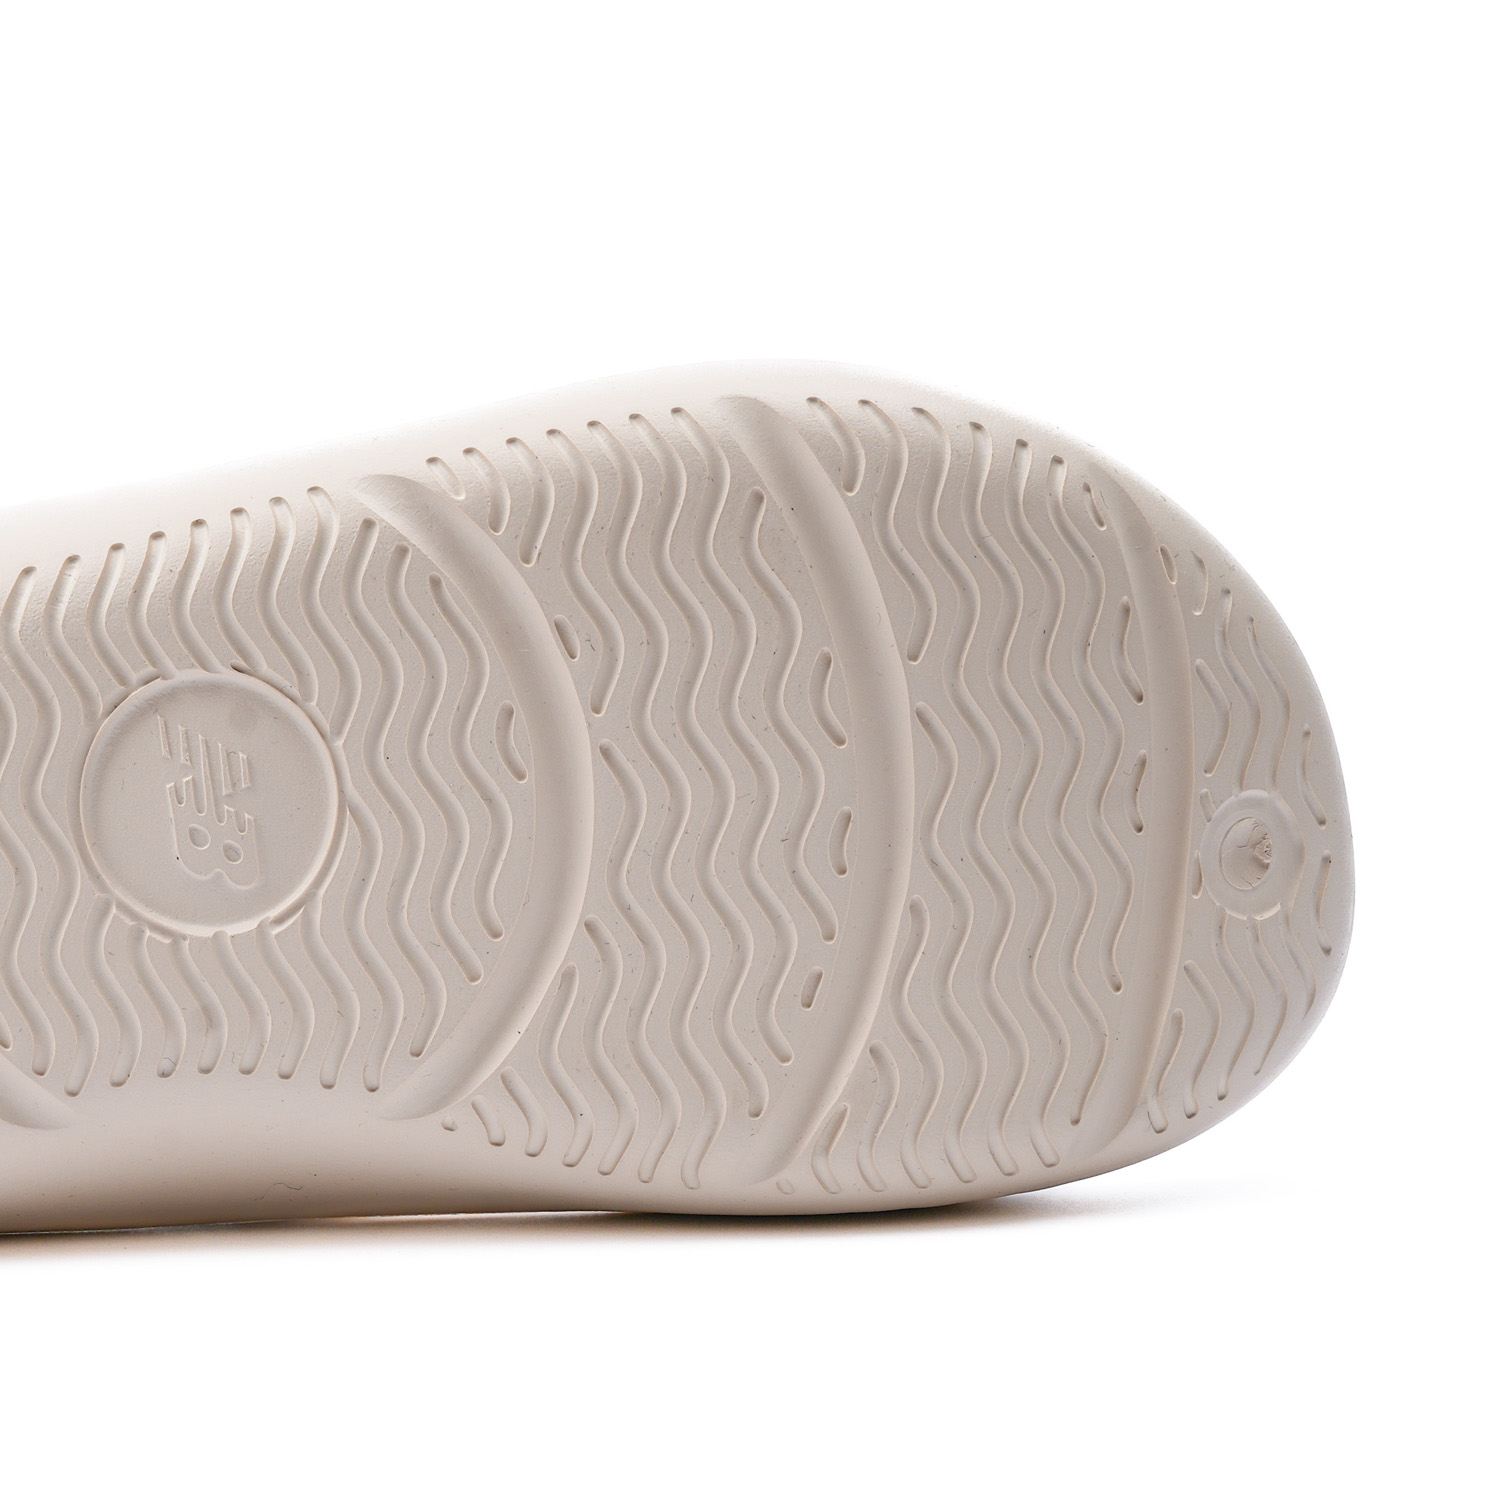 Taw & Toe x New Balance 5601 series Slides Ivory